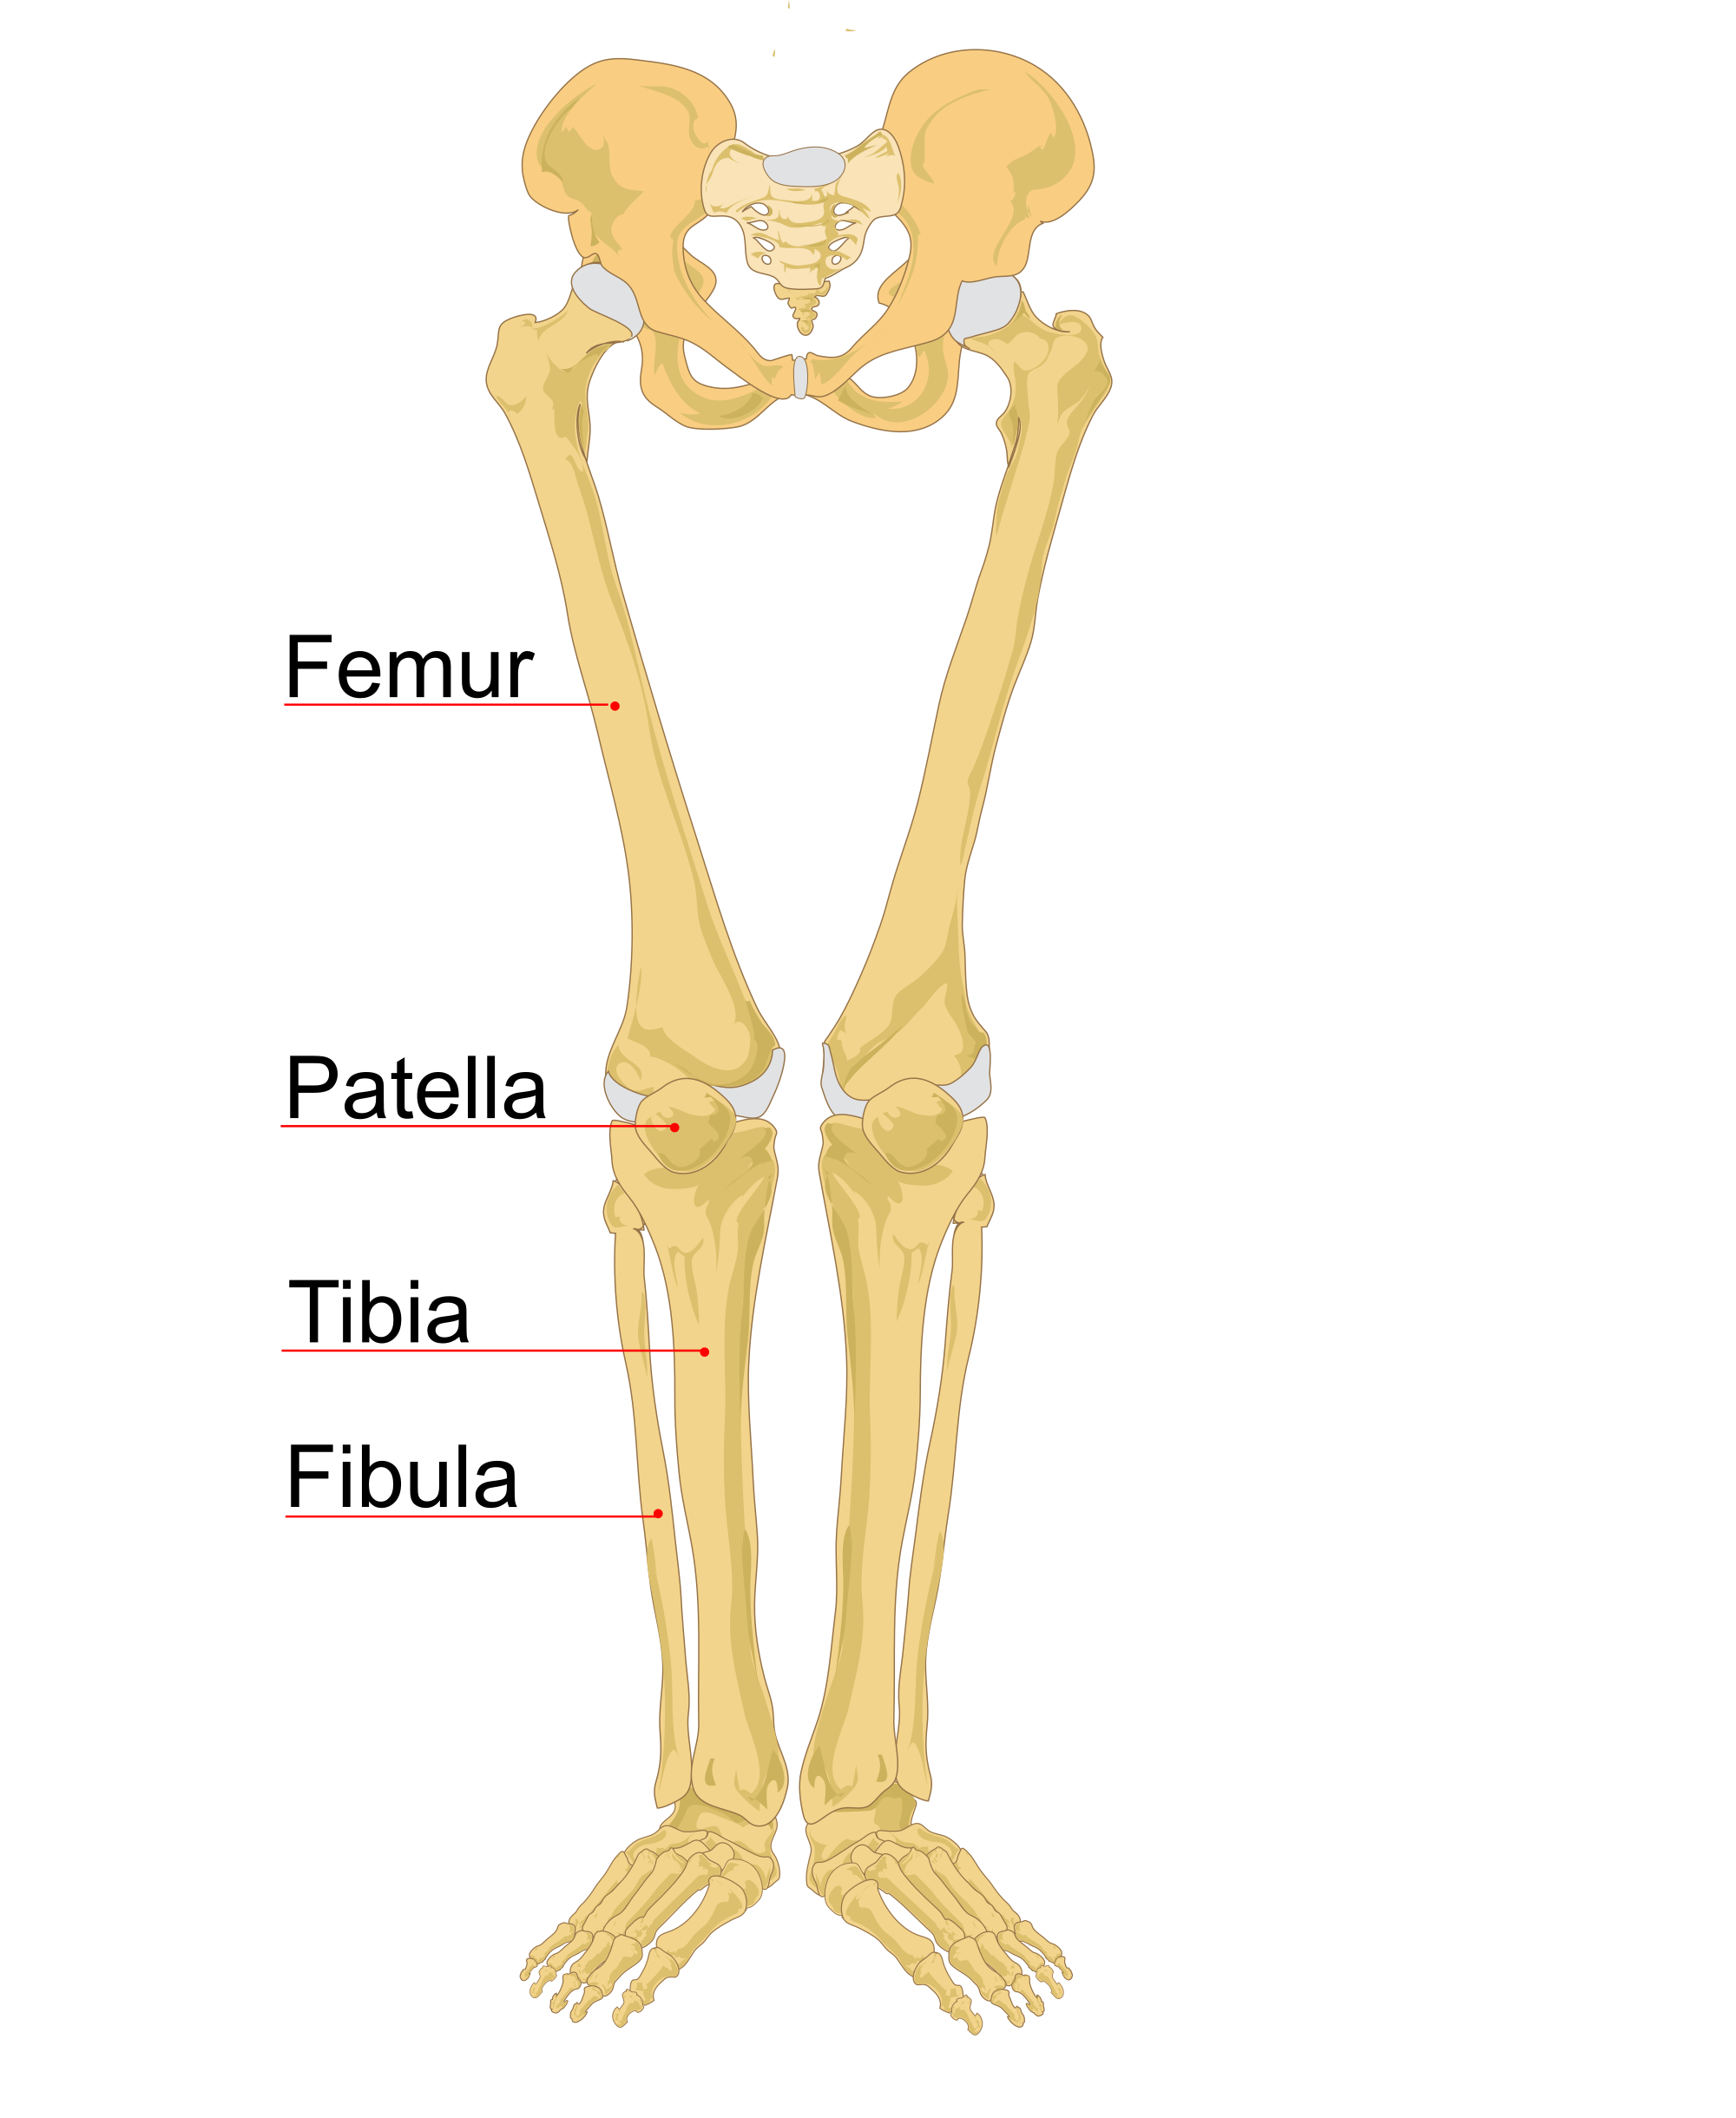 File:Human leg bones labeled.svg - Wikimedia Commons